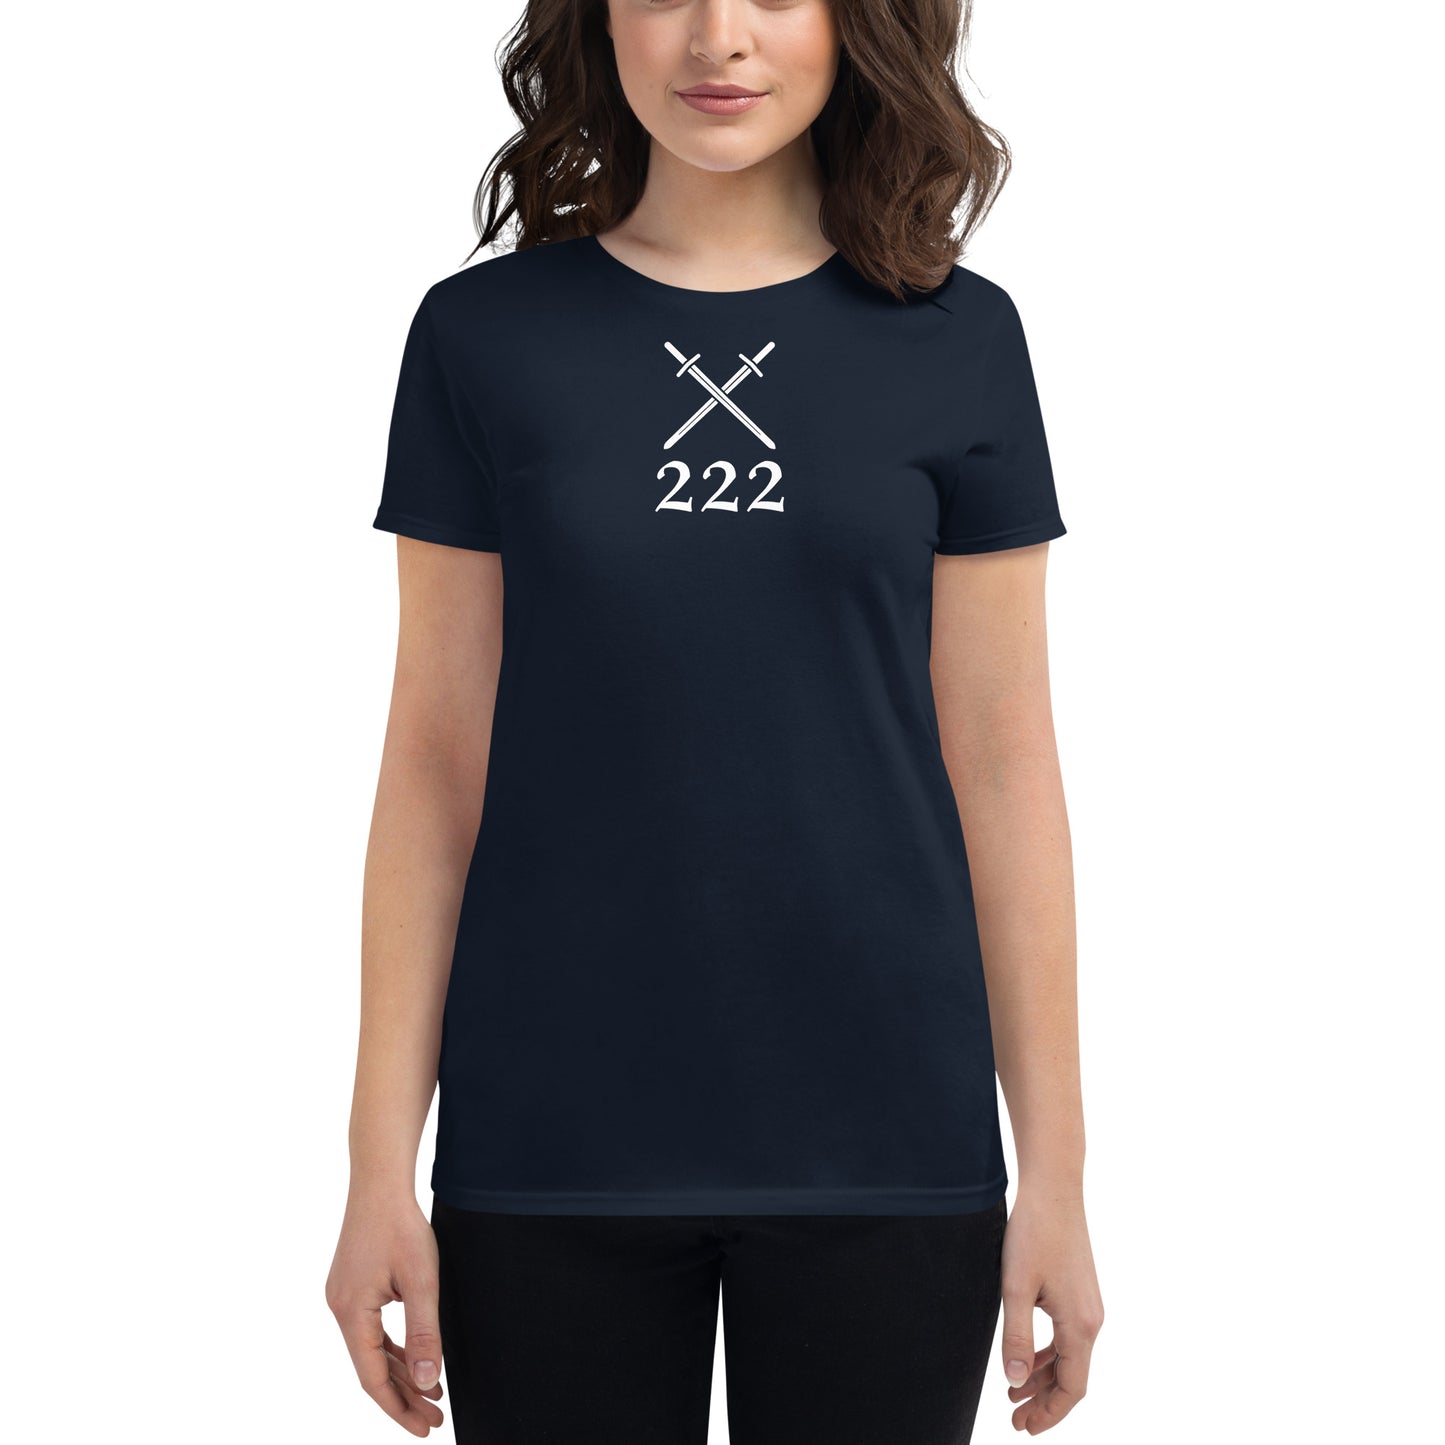 222 Women's t-shirt